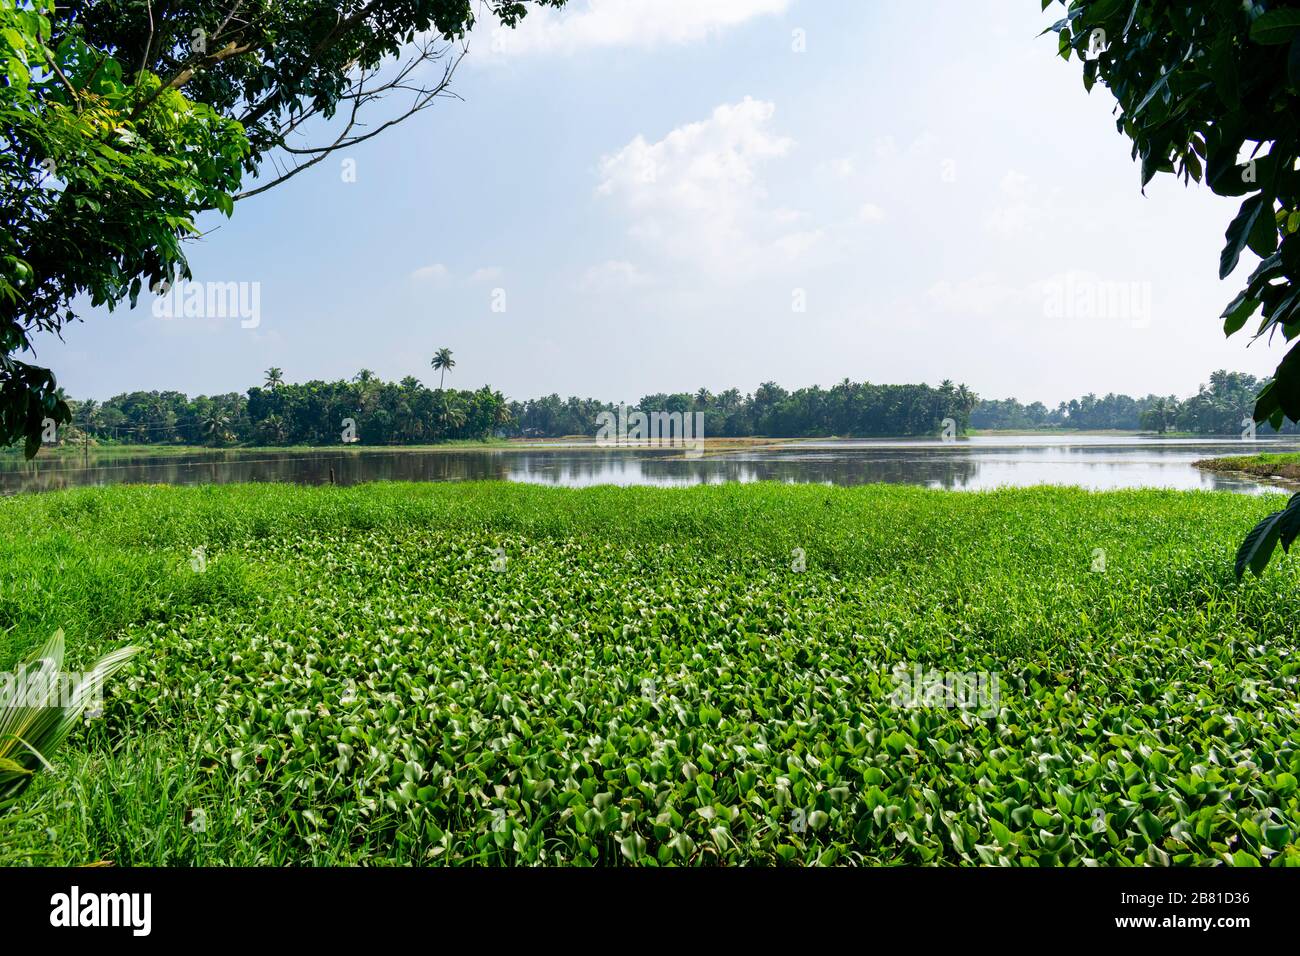 Alapphuzza, Kerala, India - December 25 2019 - A glimpse of the Vembanad lake Stock Photo